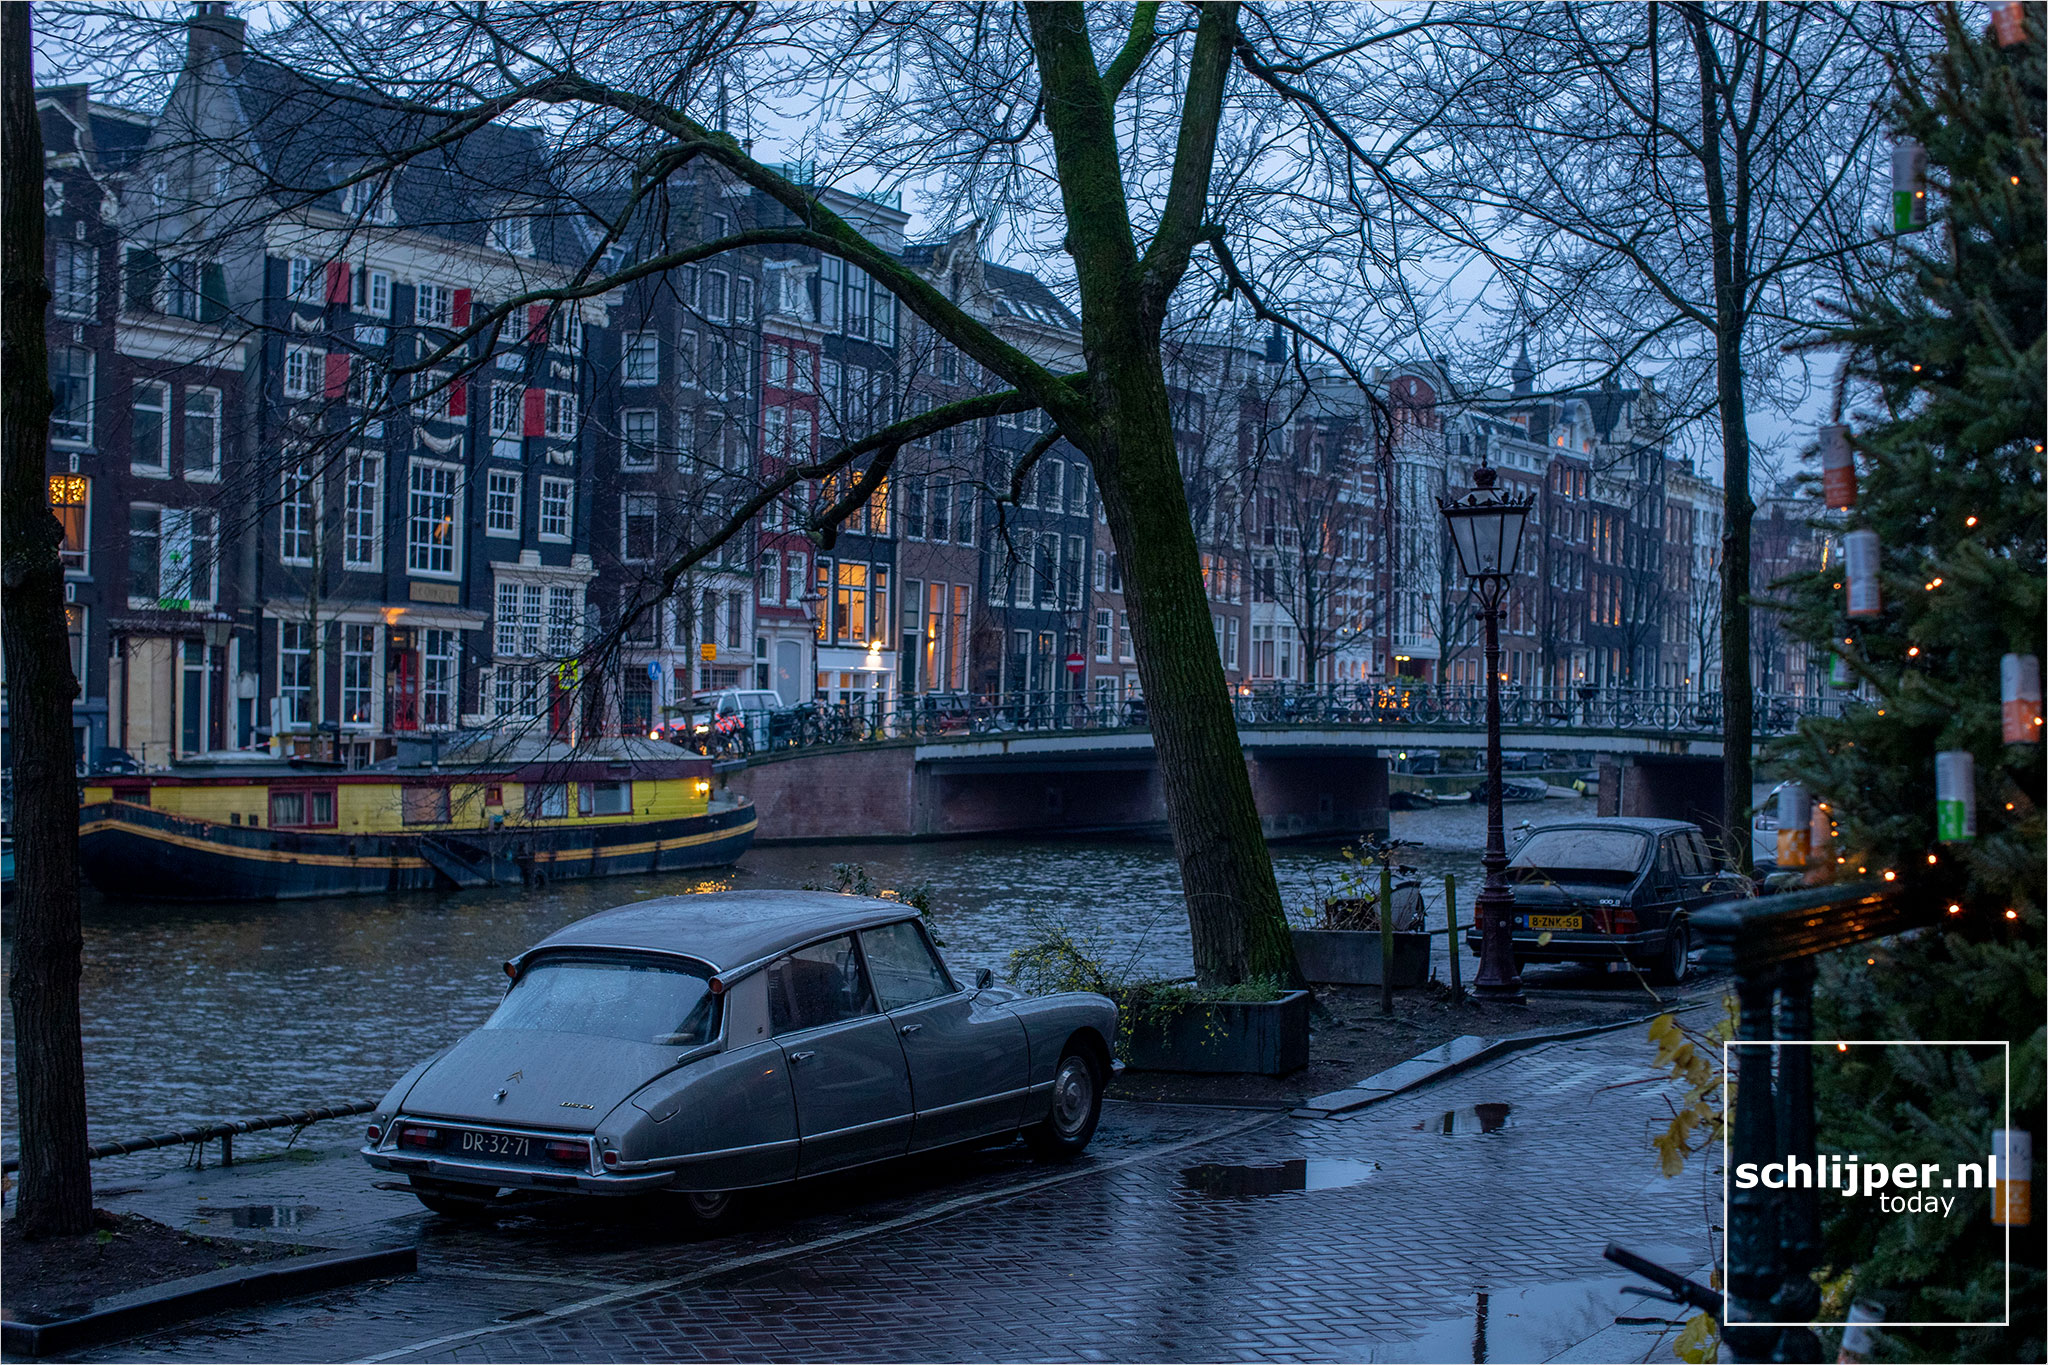 The Netherlands, Amsterdam, 26 december 2020